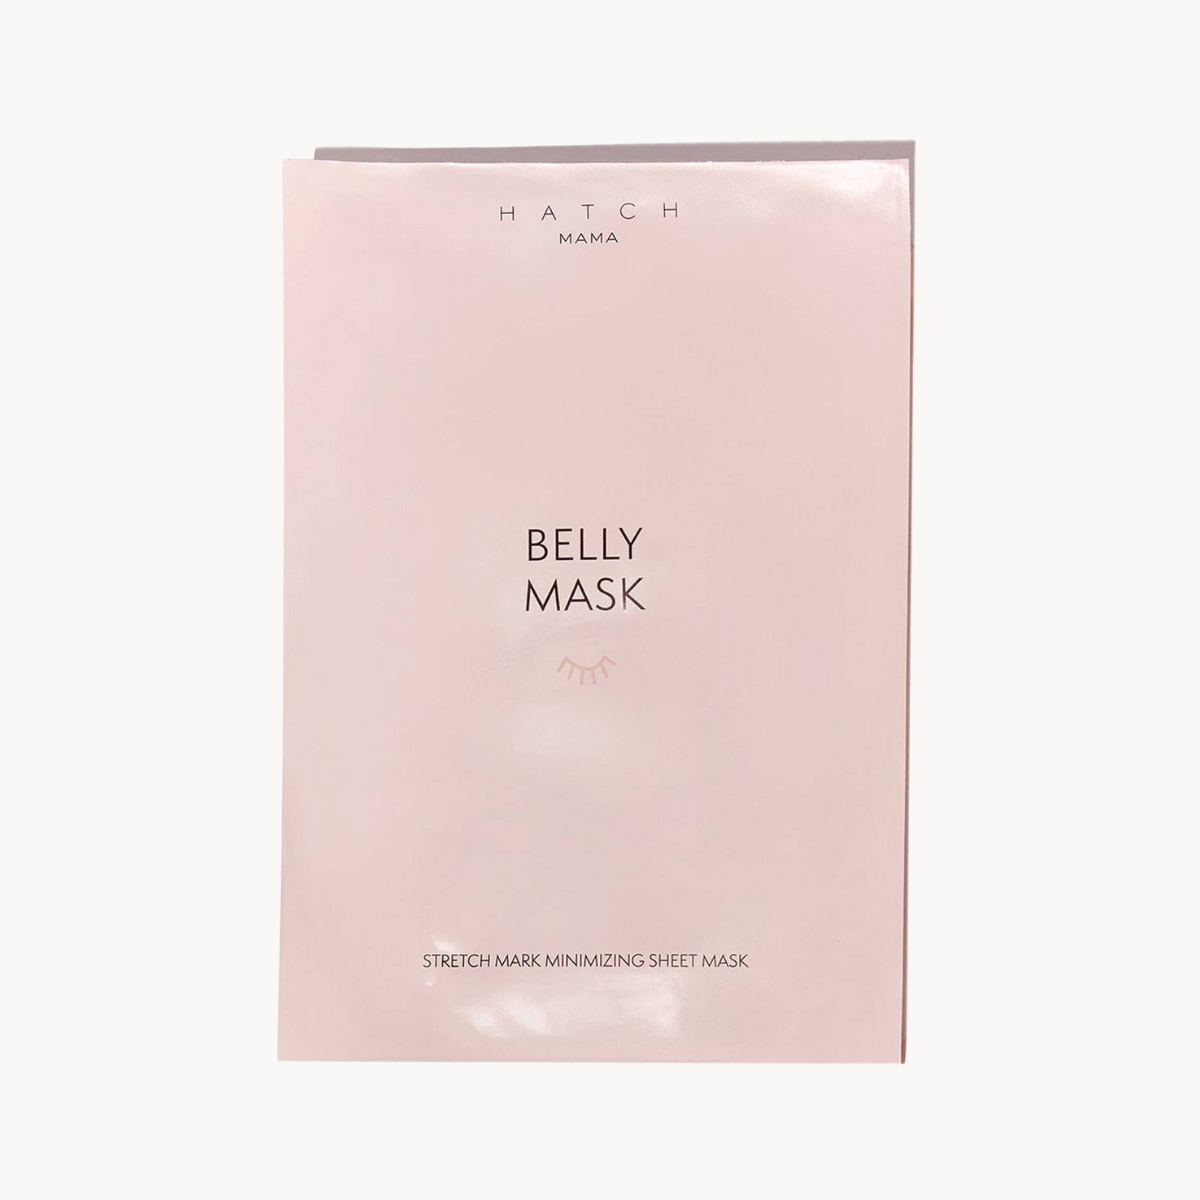 Belly Mask - Single